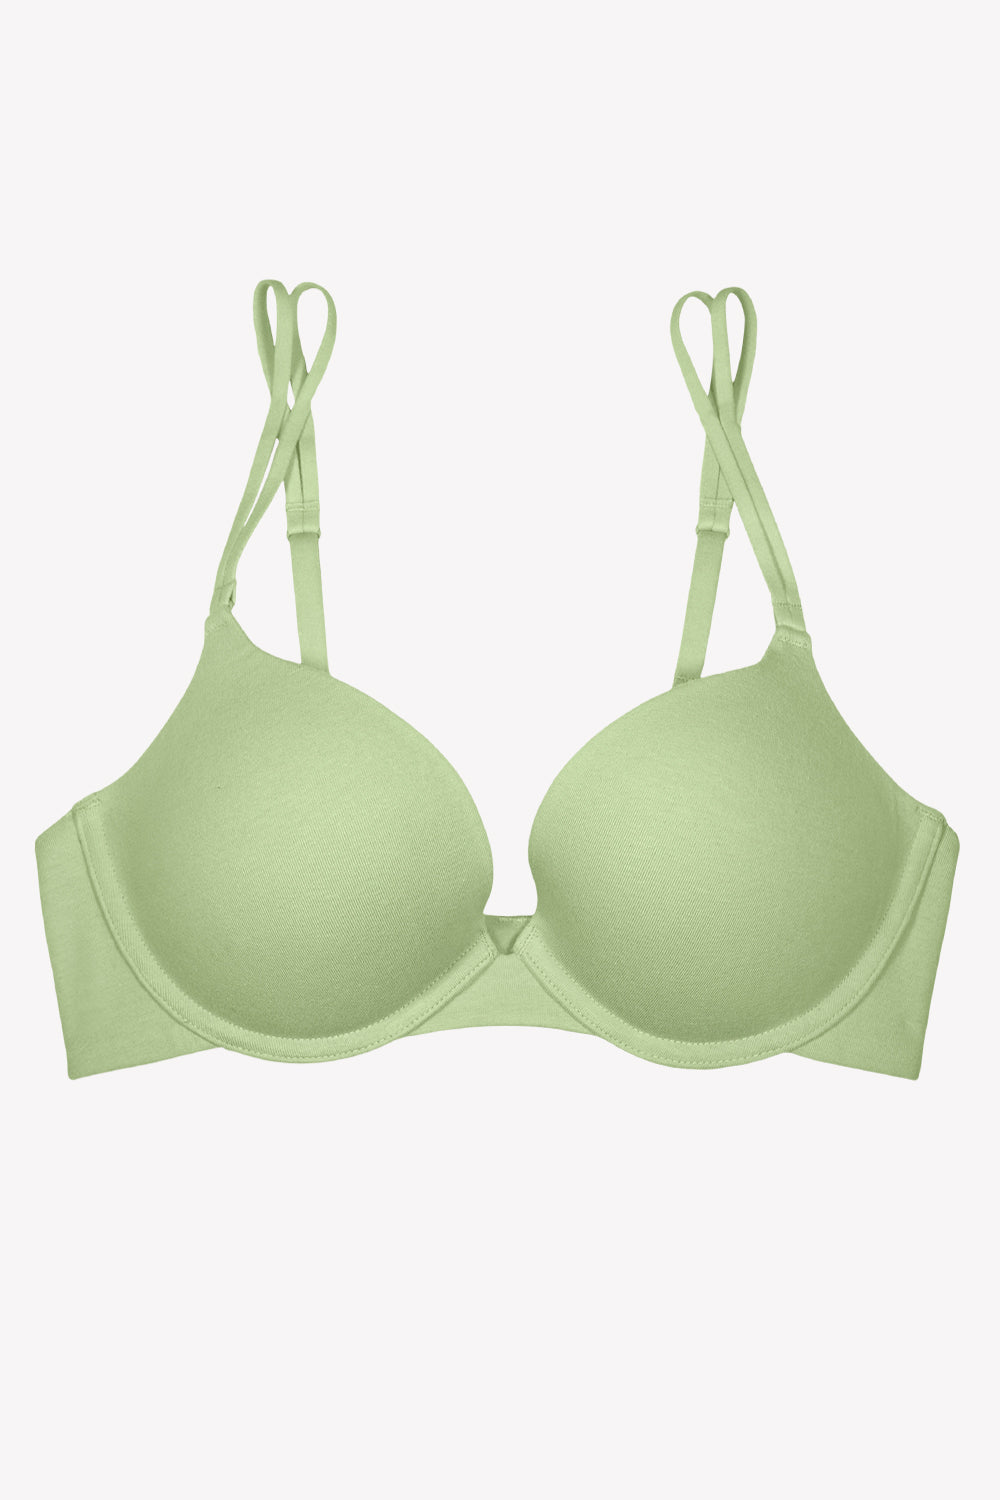 GORGEOUS Green cotton push-up bra